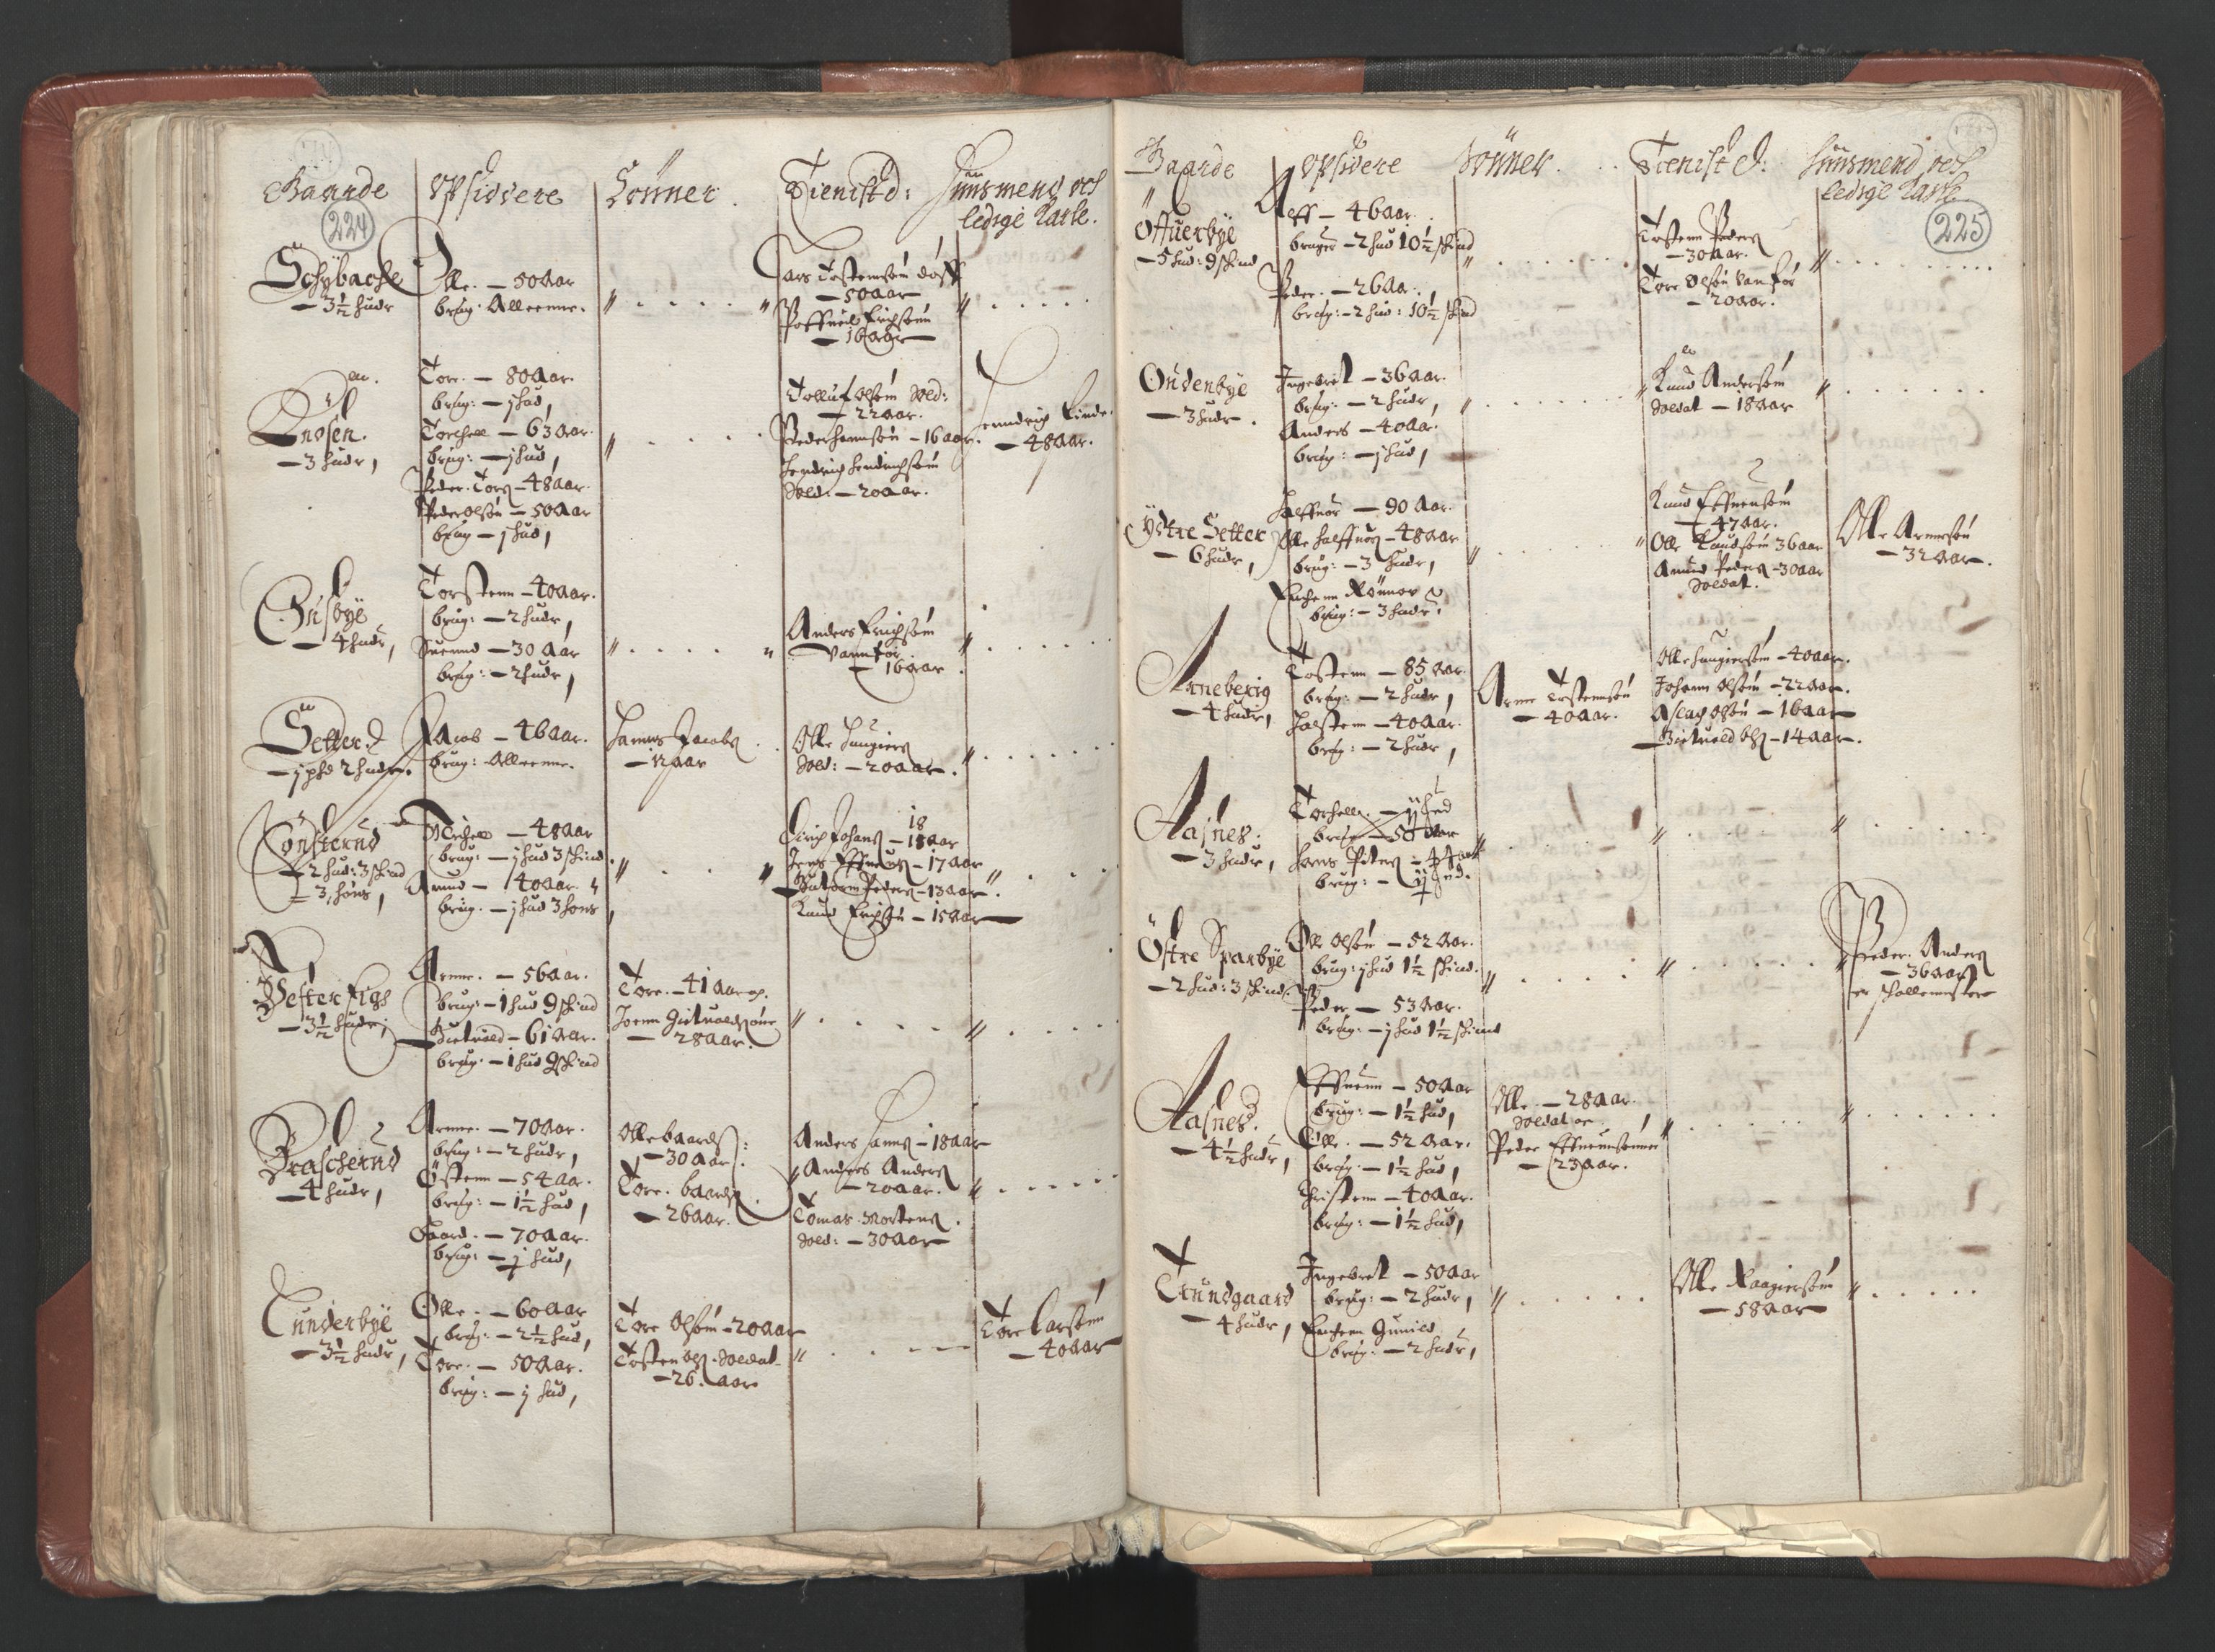 RA, Fogdenes og sorenskrivernes manntall 1664-1666, nr. 3: Hedmark fogderi og Solør, Østerdal og Odal fogderi, 1664, s. 224-225